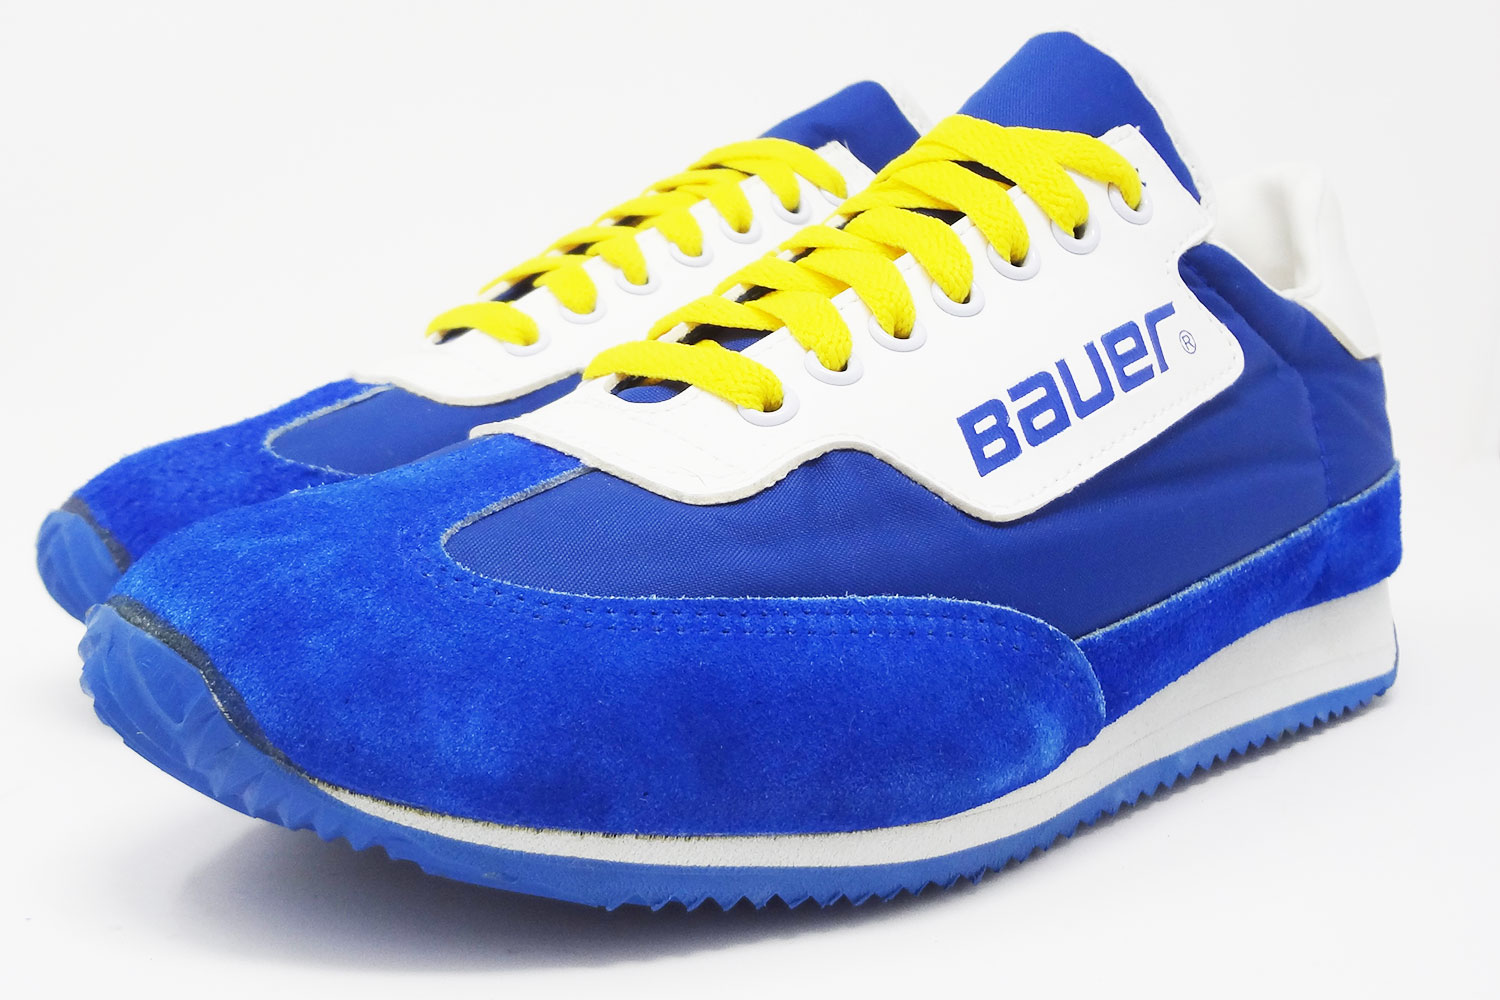 Rare vintage 70s 80s Bauer Targa II sneakers @ The Deffest